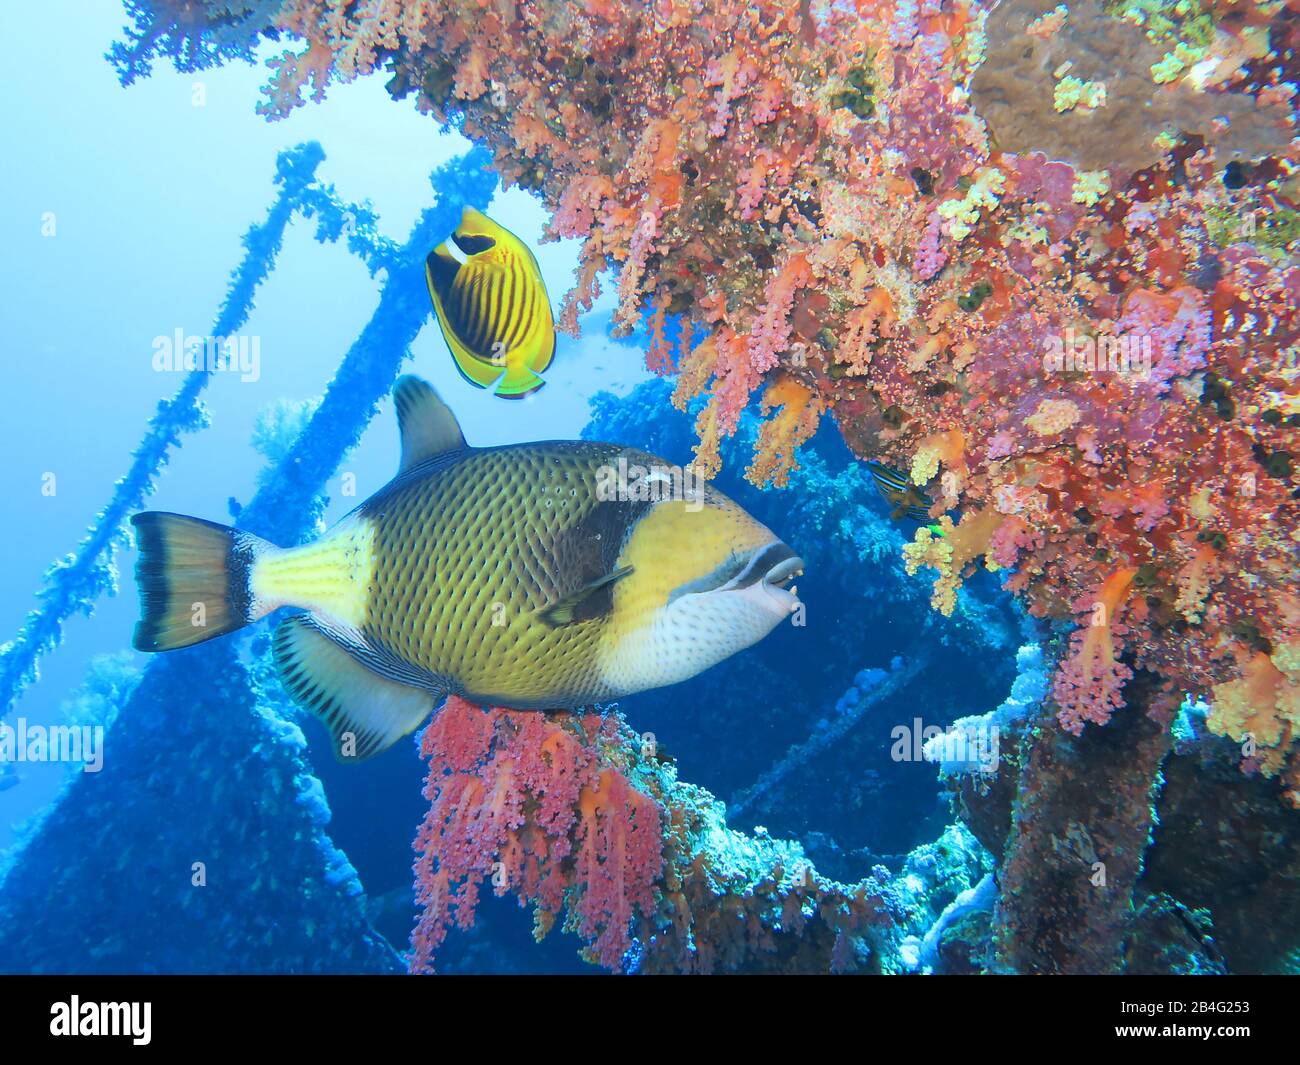 Gruener Riesendrueckerfisch (Balistoides viridescens) Wrack Numidia, Korallen, Brother Islands, Rotes Meer, Aegypten / Ägypten Stock Photo